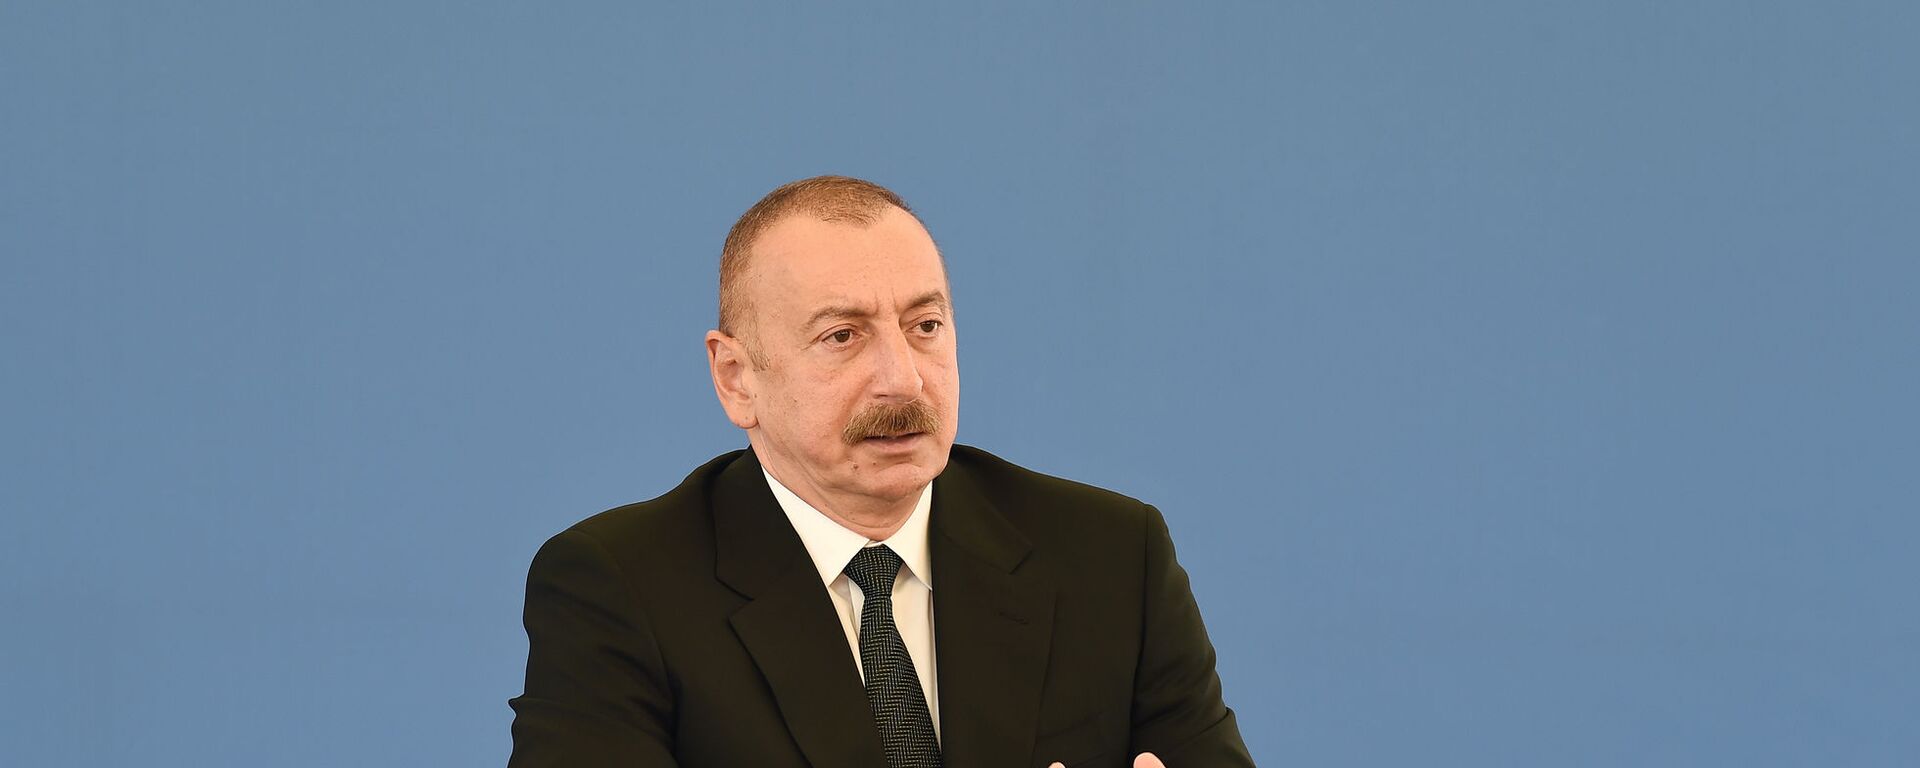 Президент Ильхам Алиев, фото из архива  - Sputnik Азербайджан, 1920, 09.02.2021